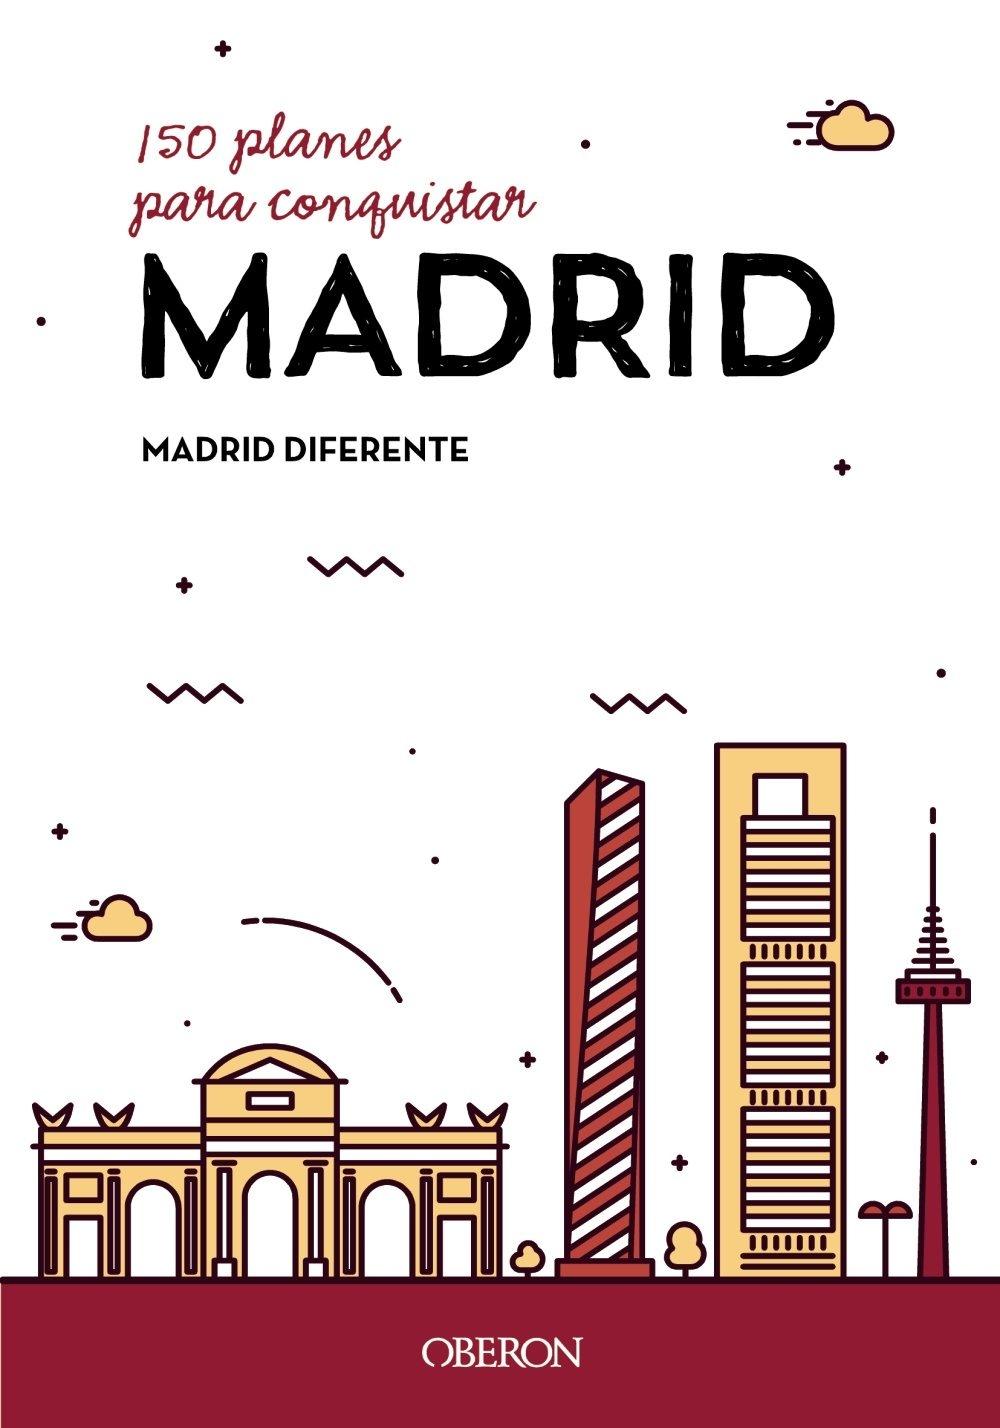 150 planes para conquistar Madrid "Madrid diferente"